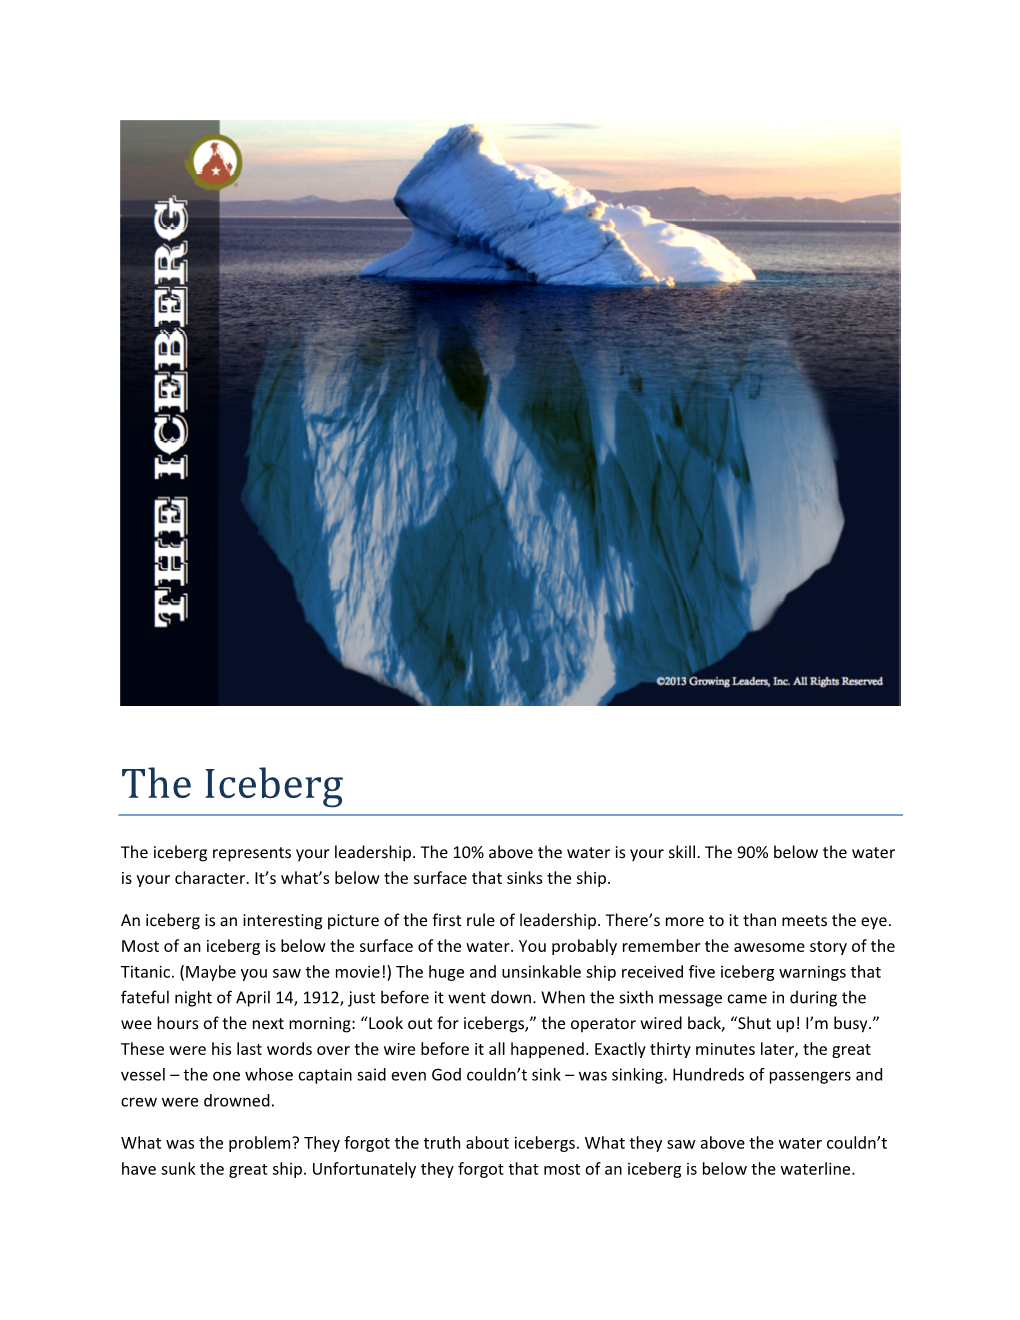 The Iceberg Represents Your Leadership